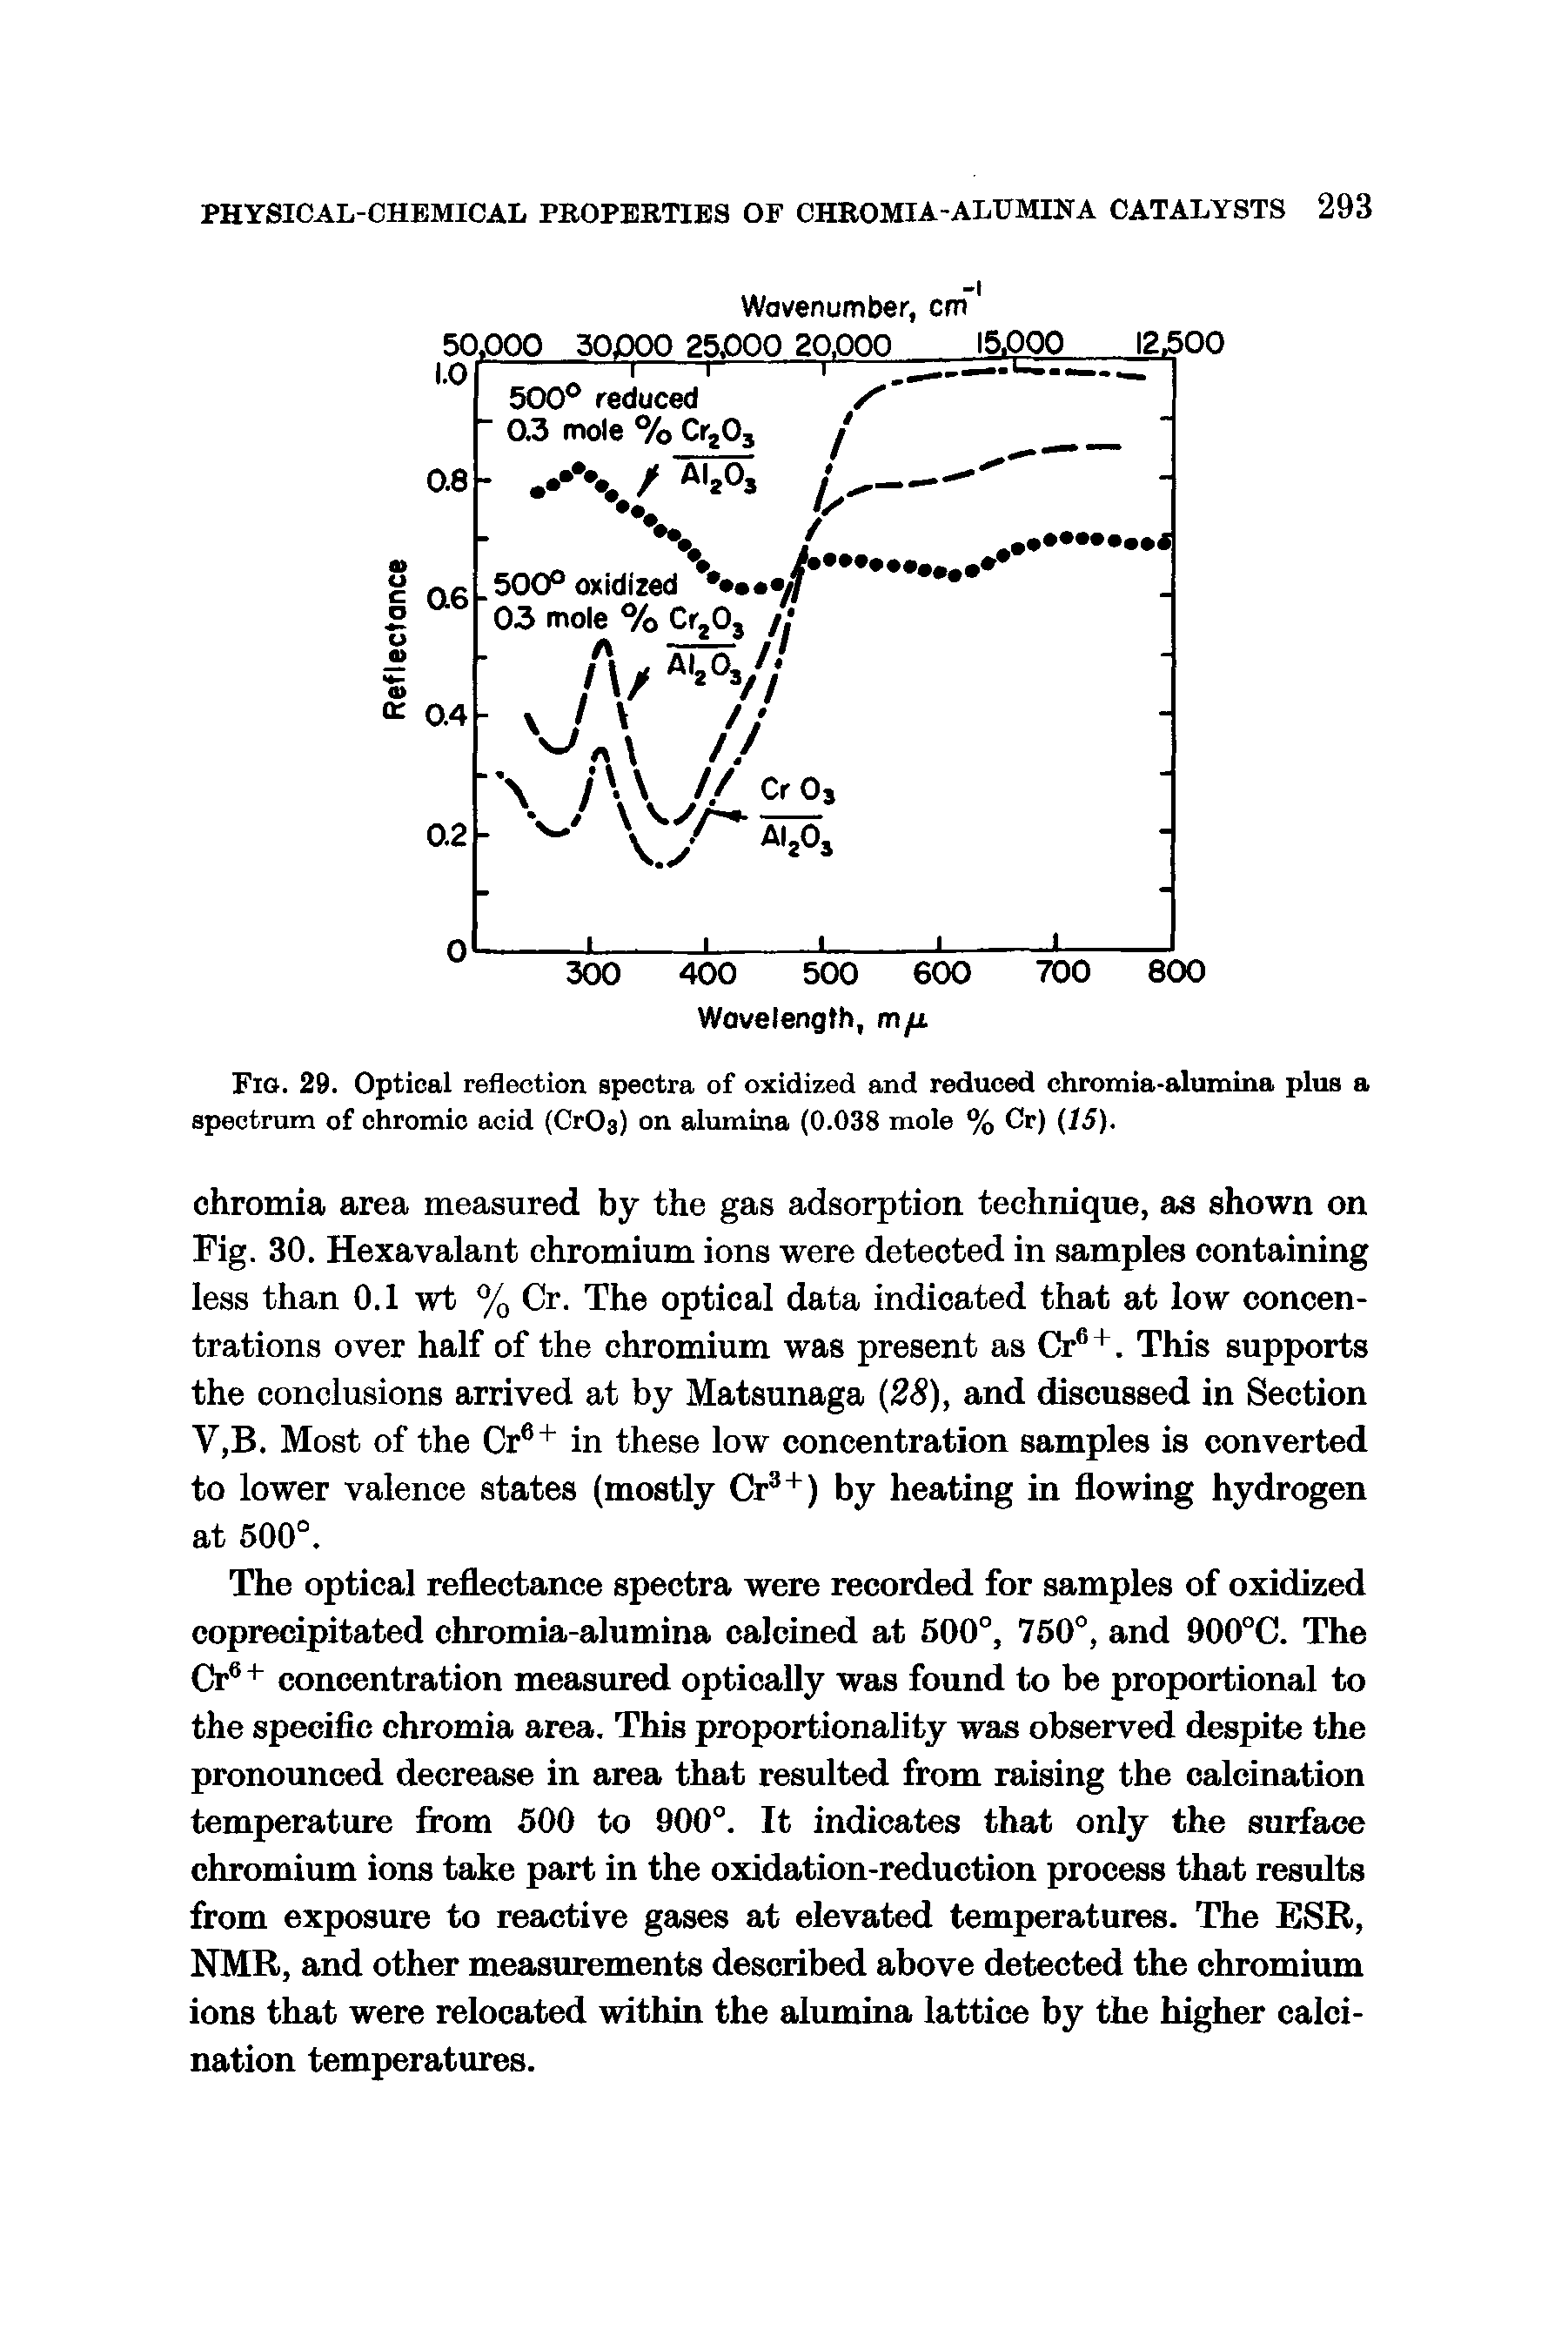 Fig. 29. Optical reflection spectra of oxidized and reduced chromia-alumina plus a spectrum of chromic acid (CrOa) on alumina (0.038 mole % Cr) IS).